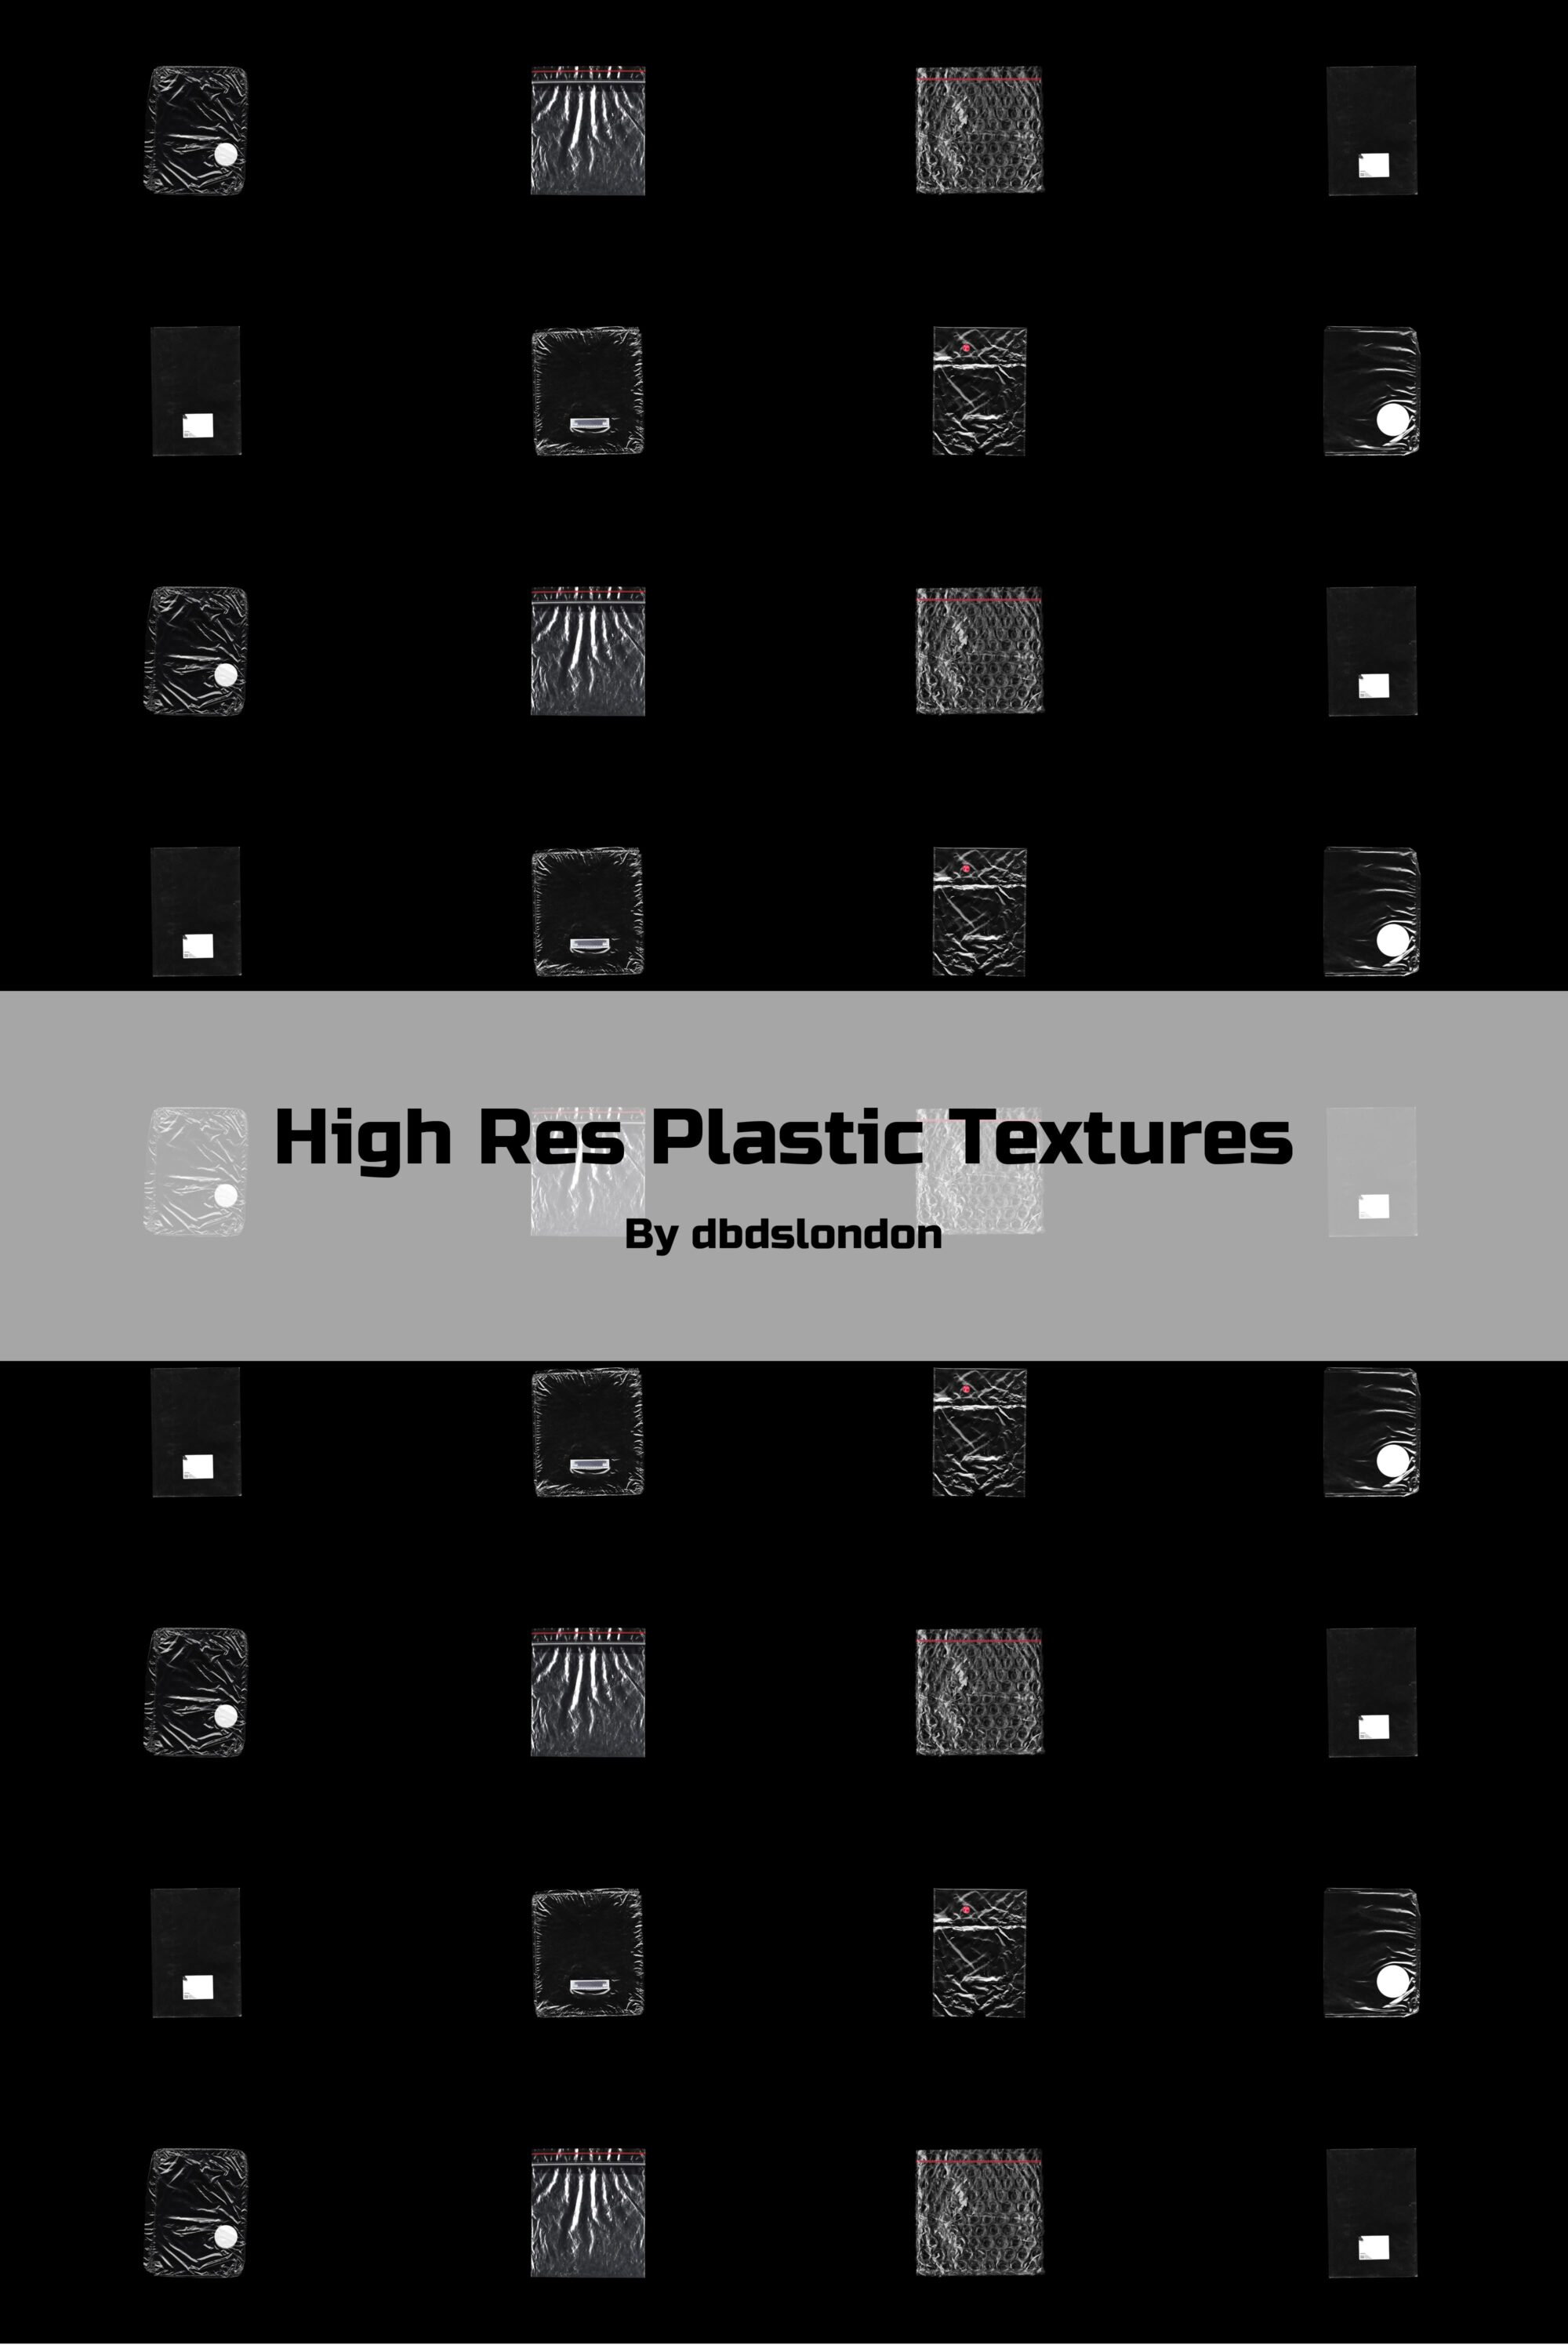 High Res Plastic Textures pinterest image.